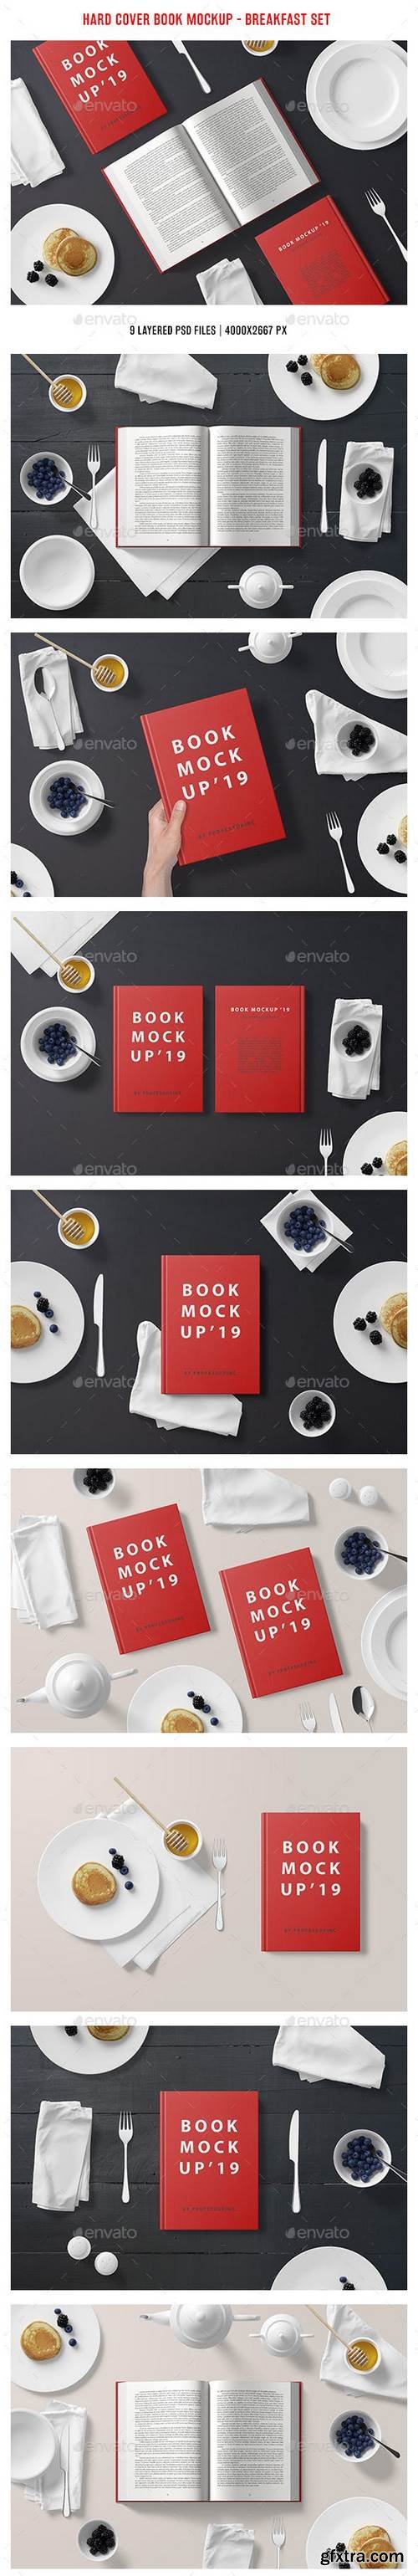 Graphicriver - Hard Cover Book Mockup - Breakfast Set 23047642